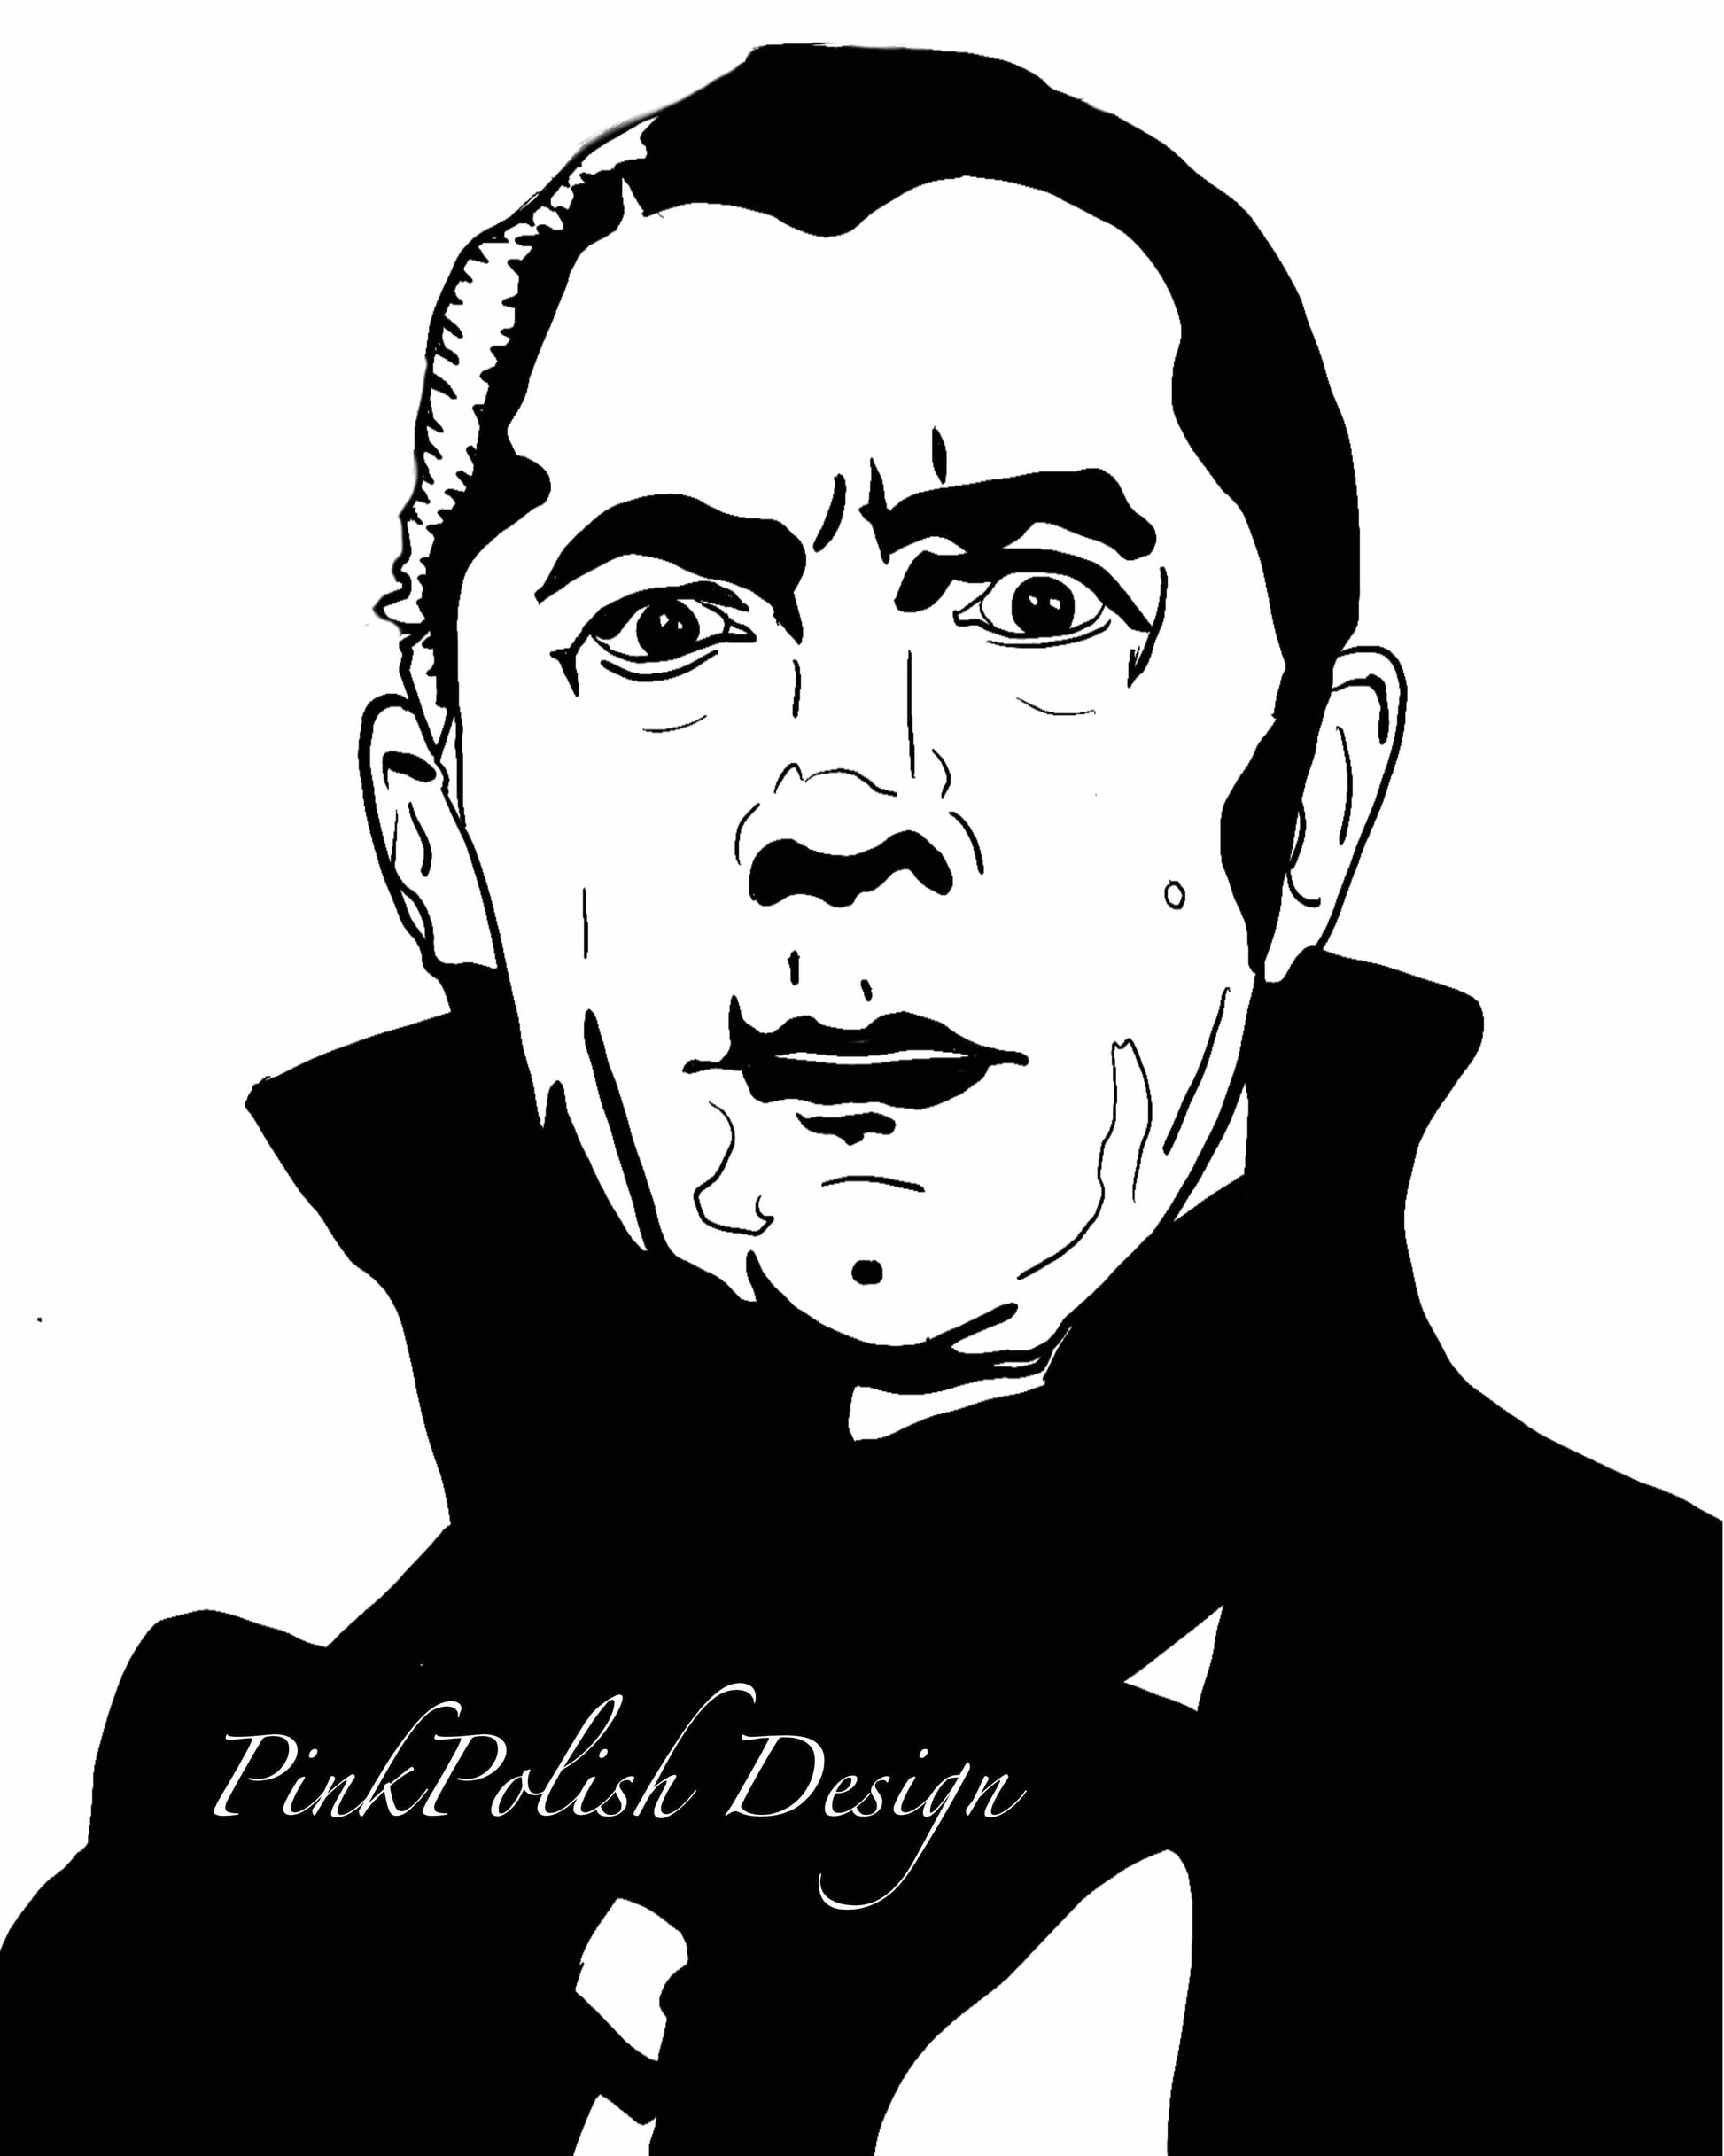 PinkPolish Design Art Prints "Dracula" Digital Drawing: Art Print